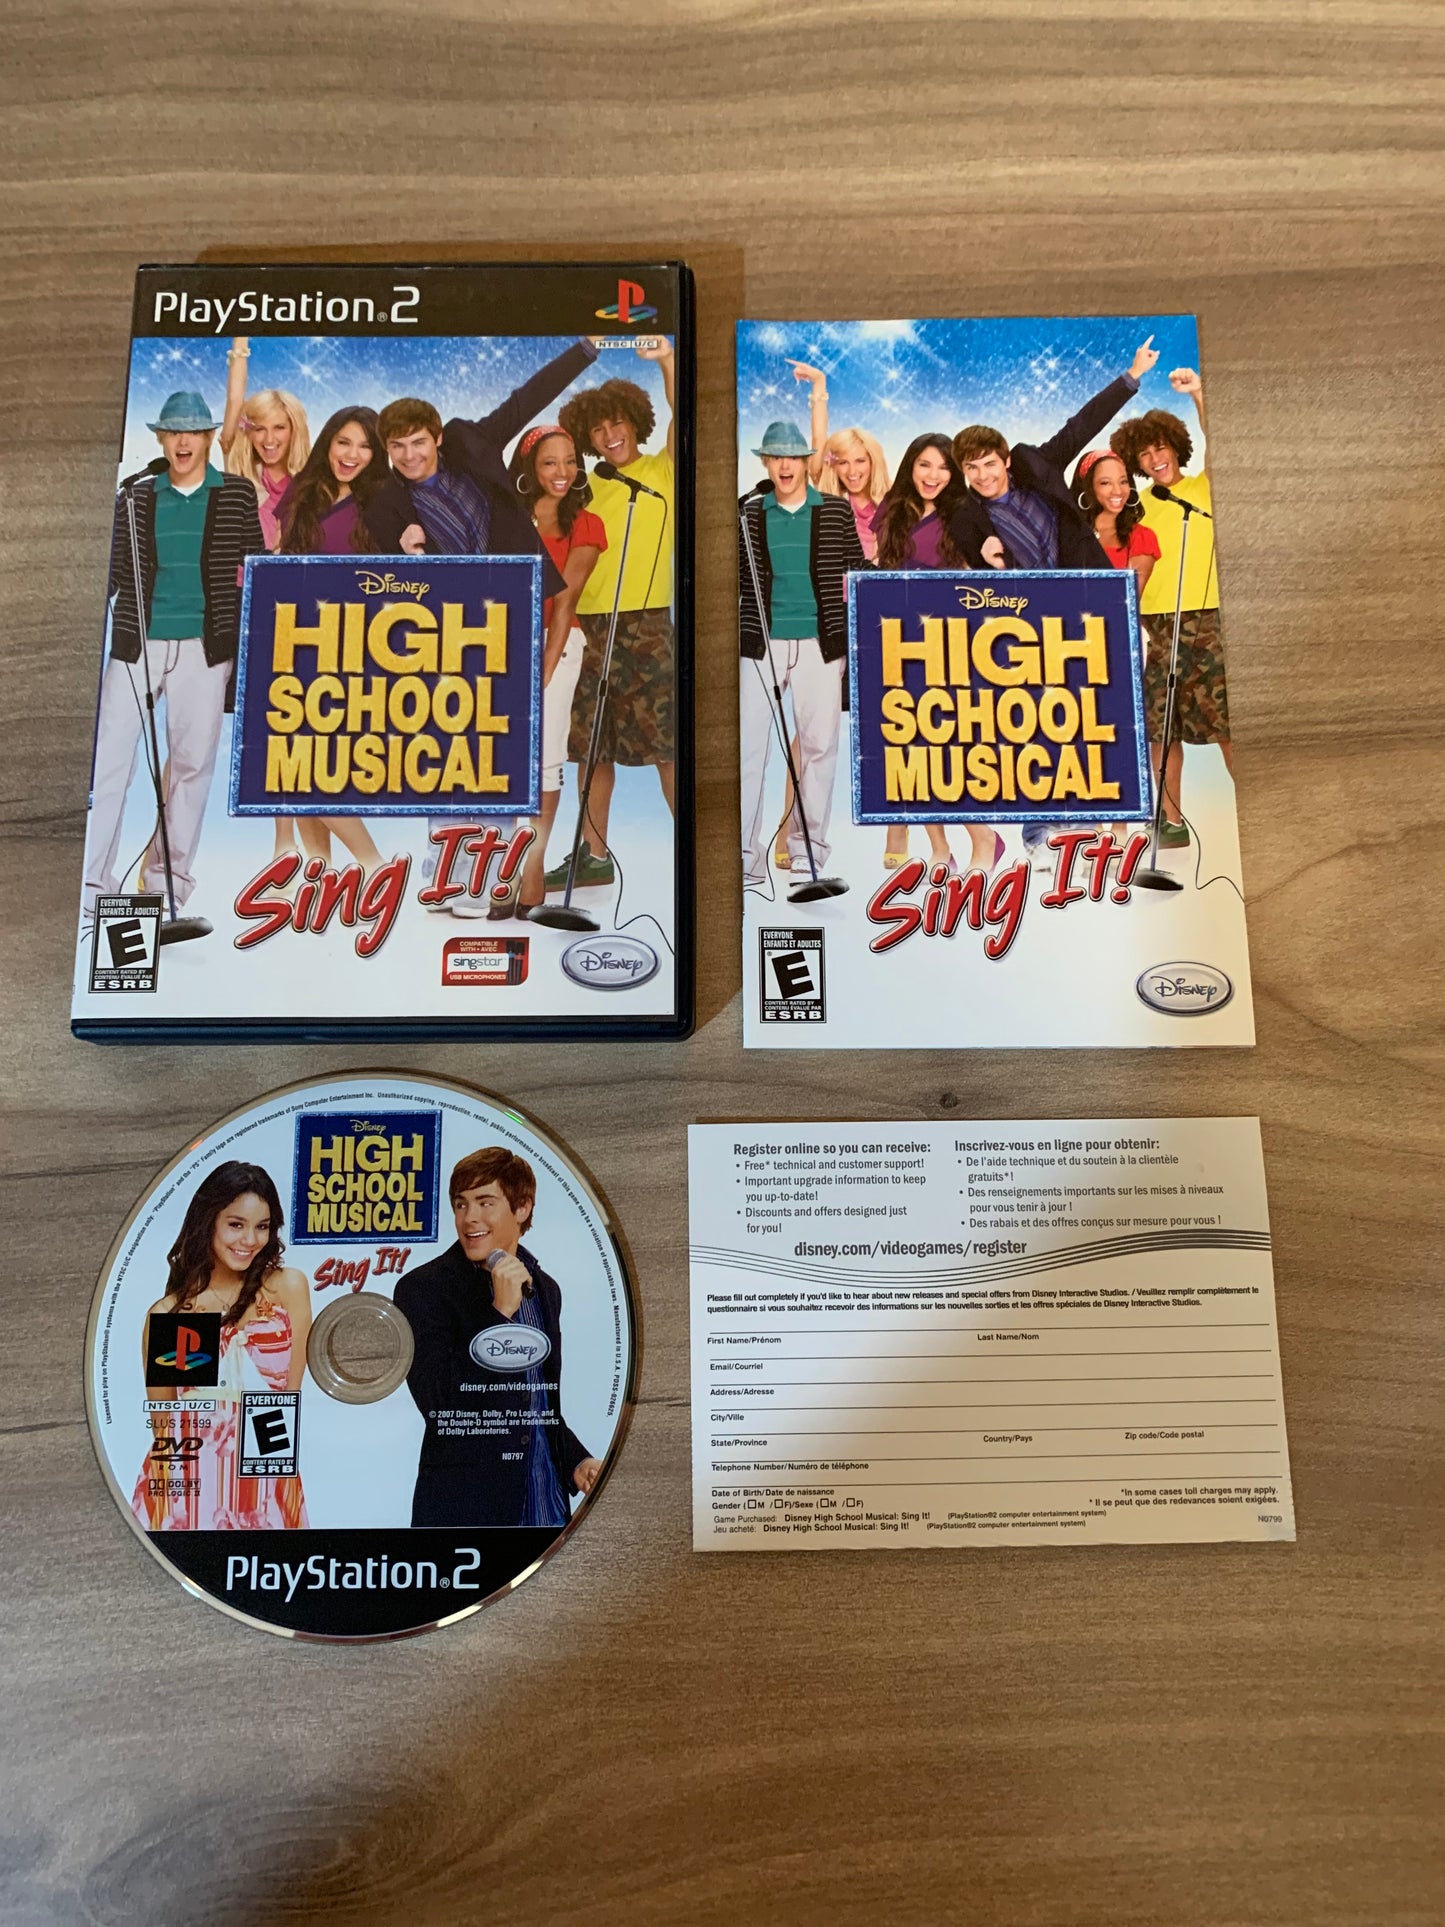 PiXEL-RETRO.COM : SONY PLAYSTATION 2 (PS2) COMPLET CIB BOX MANUAL GAME NTSC HIGH SCHOOL MUSICAL SING IT!